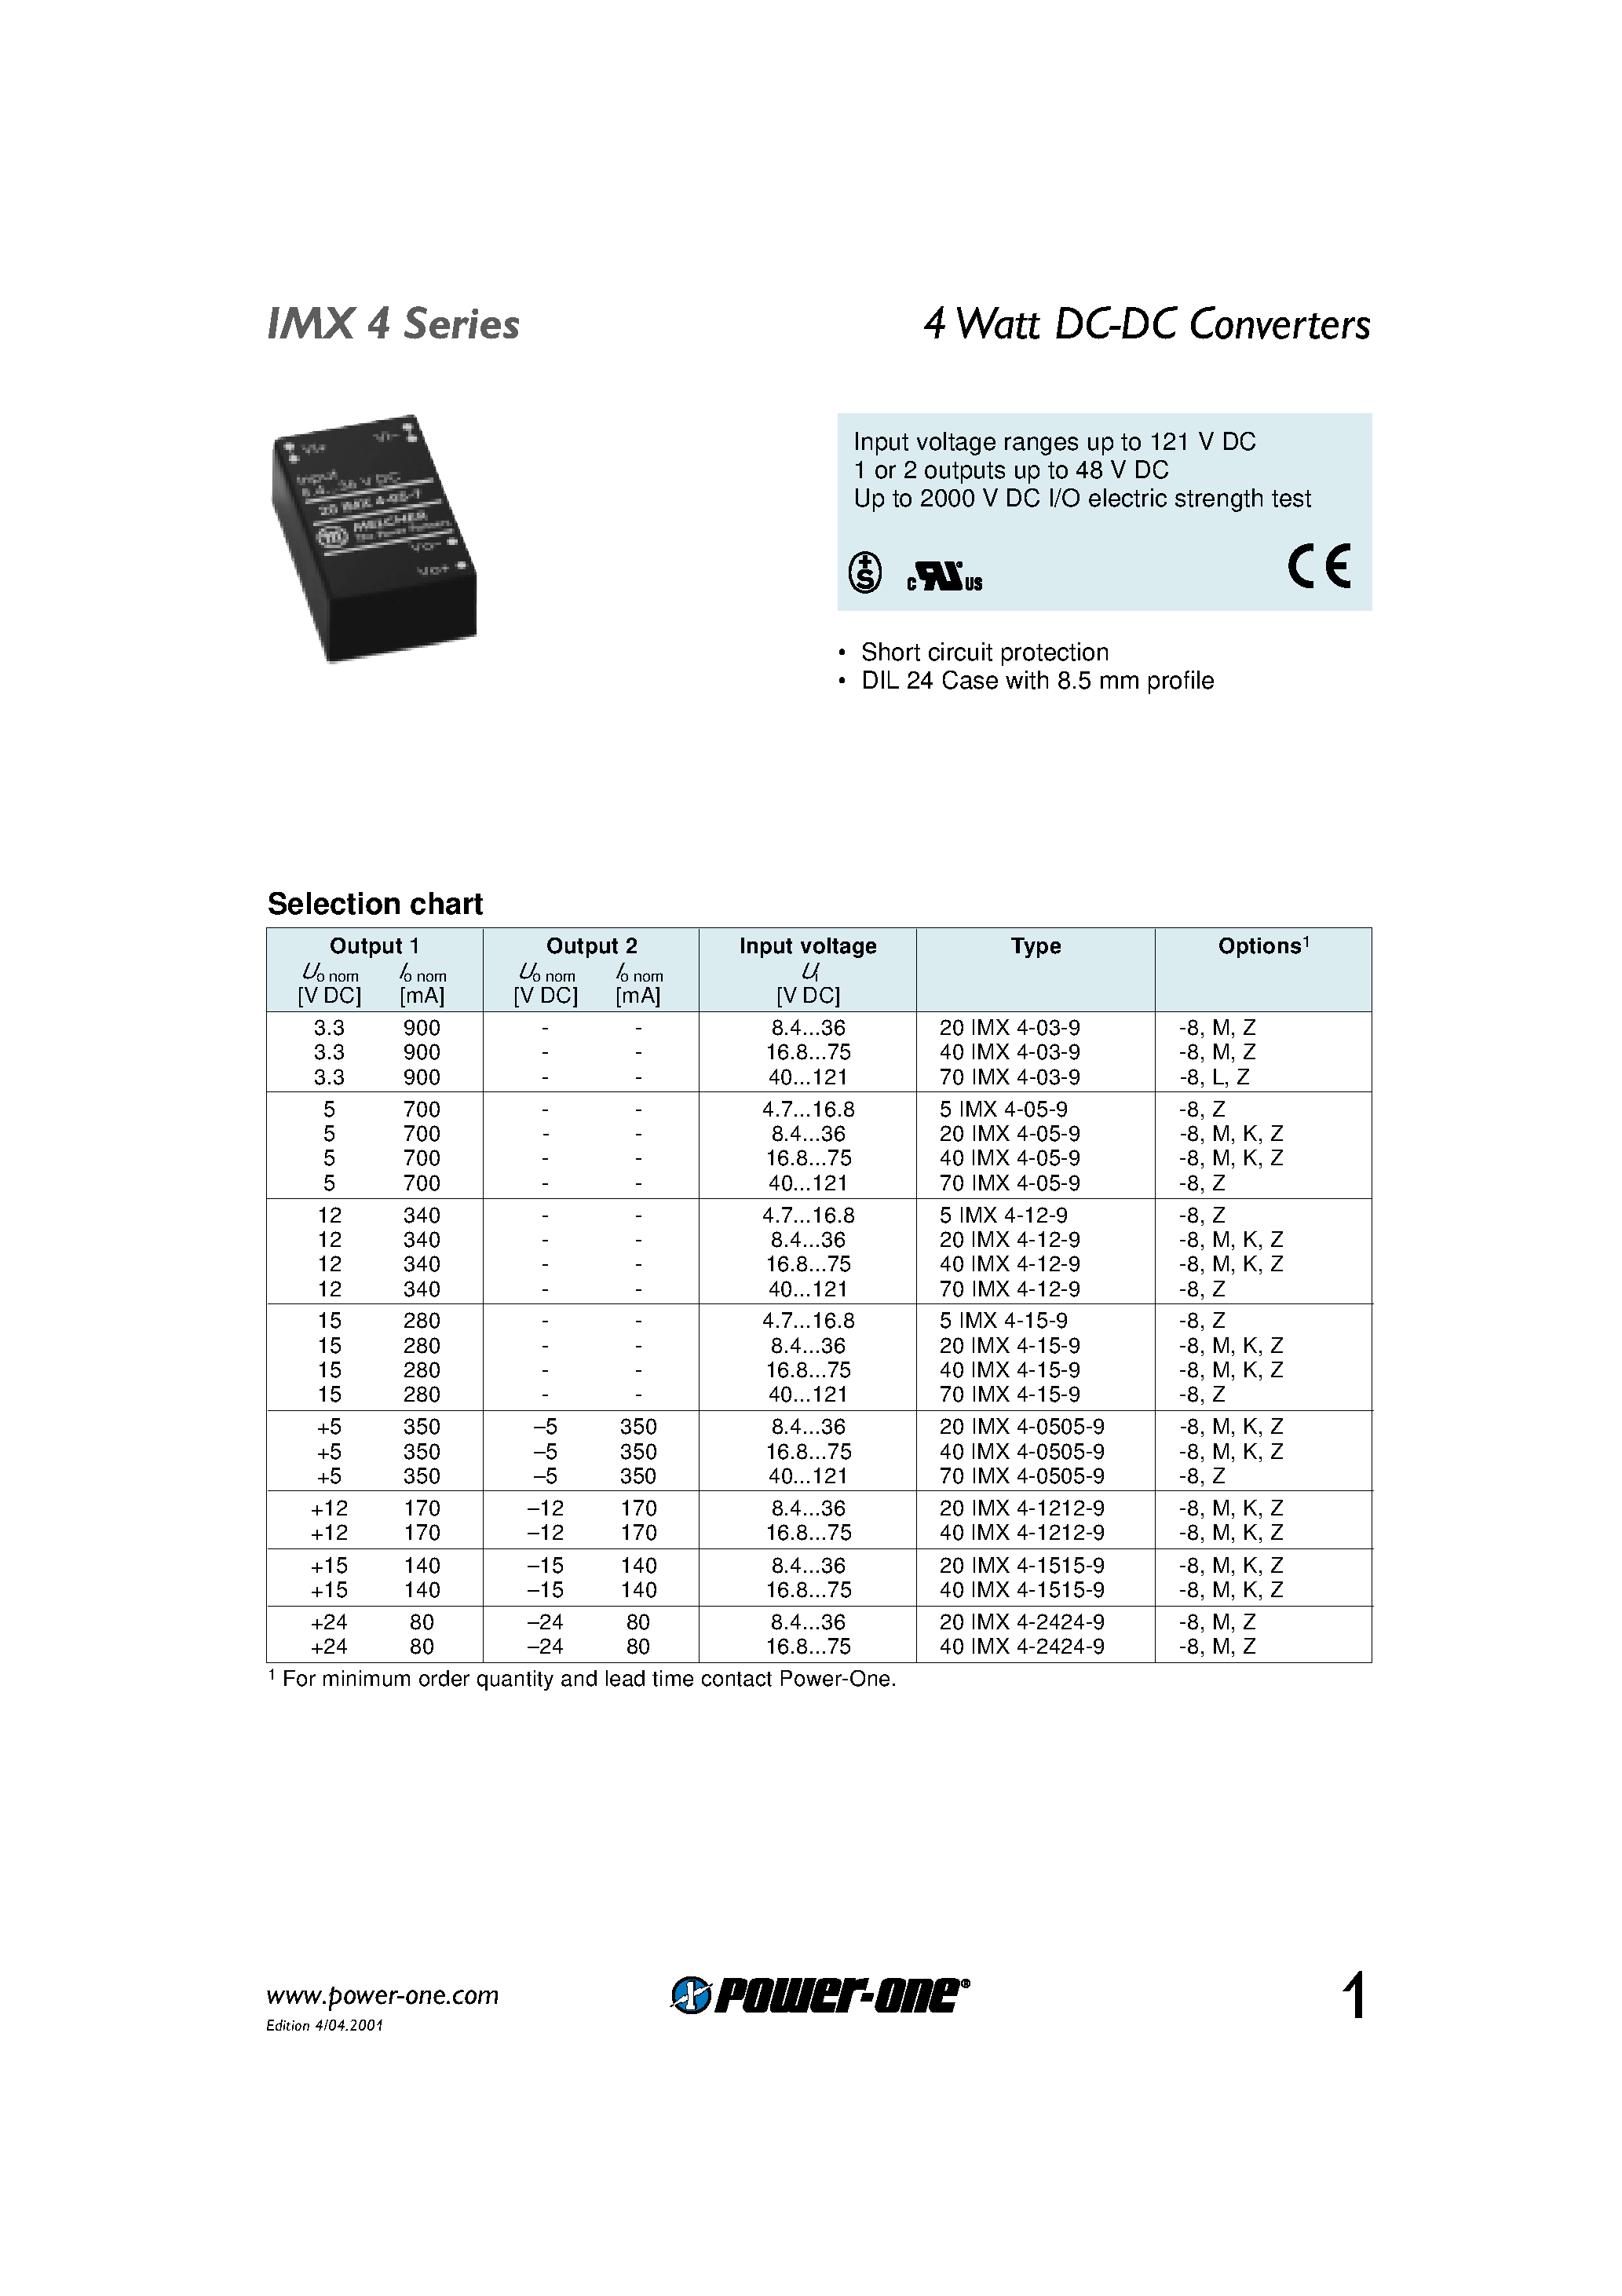 Даташит 70IMX4-12-9 - 4 Watt DC-DC Converters страница 1